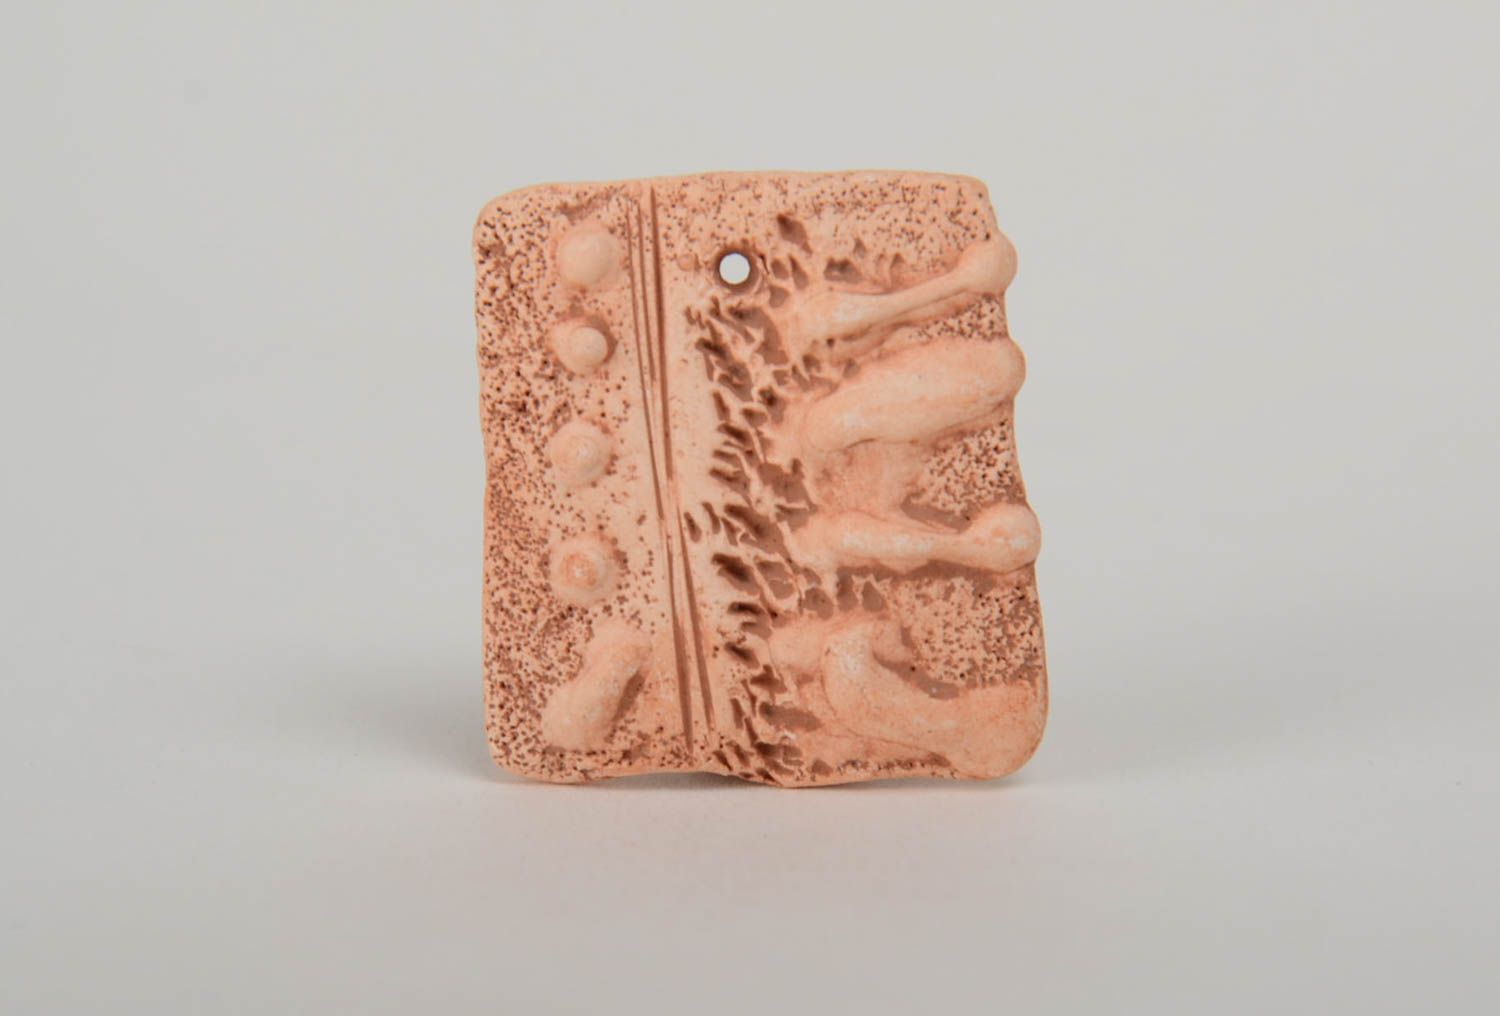 Handmade decorative ceramic element component for ethnic jewelry making photo 2